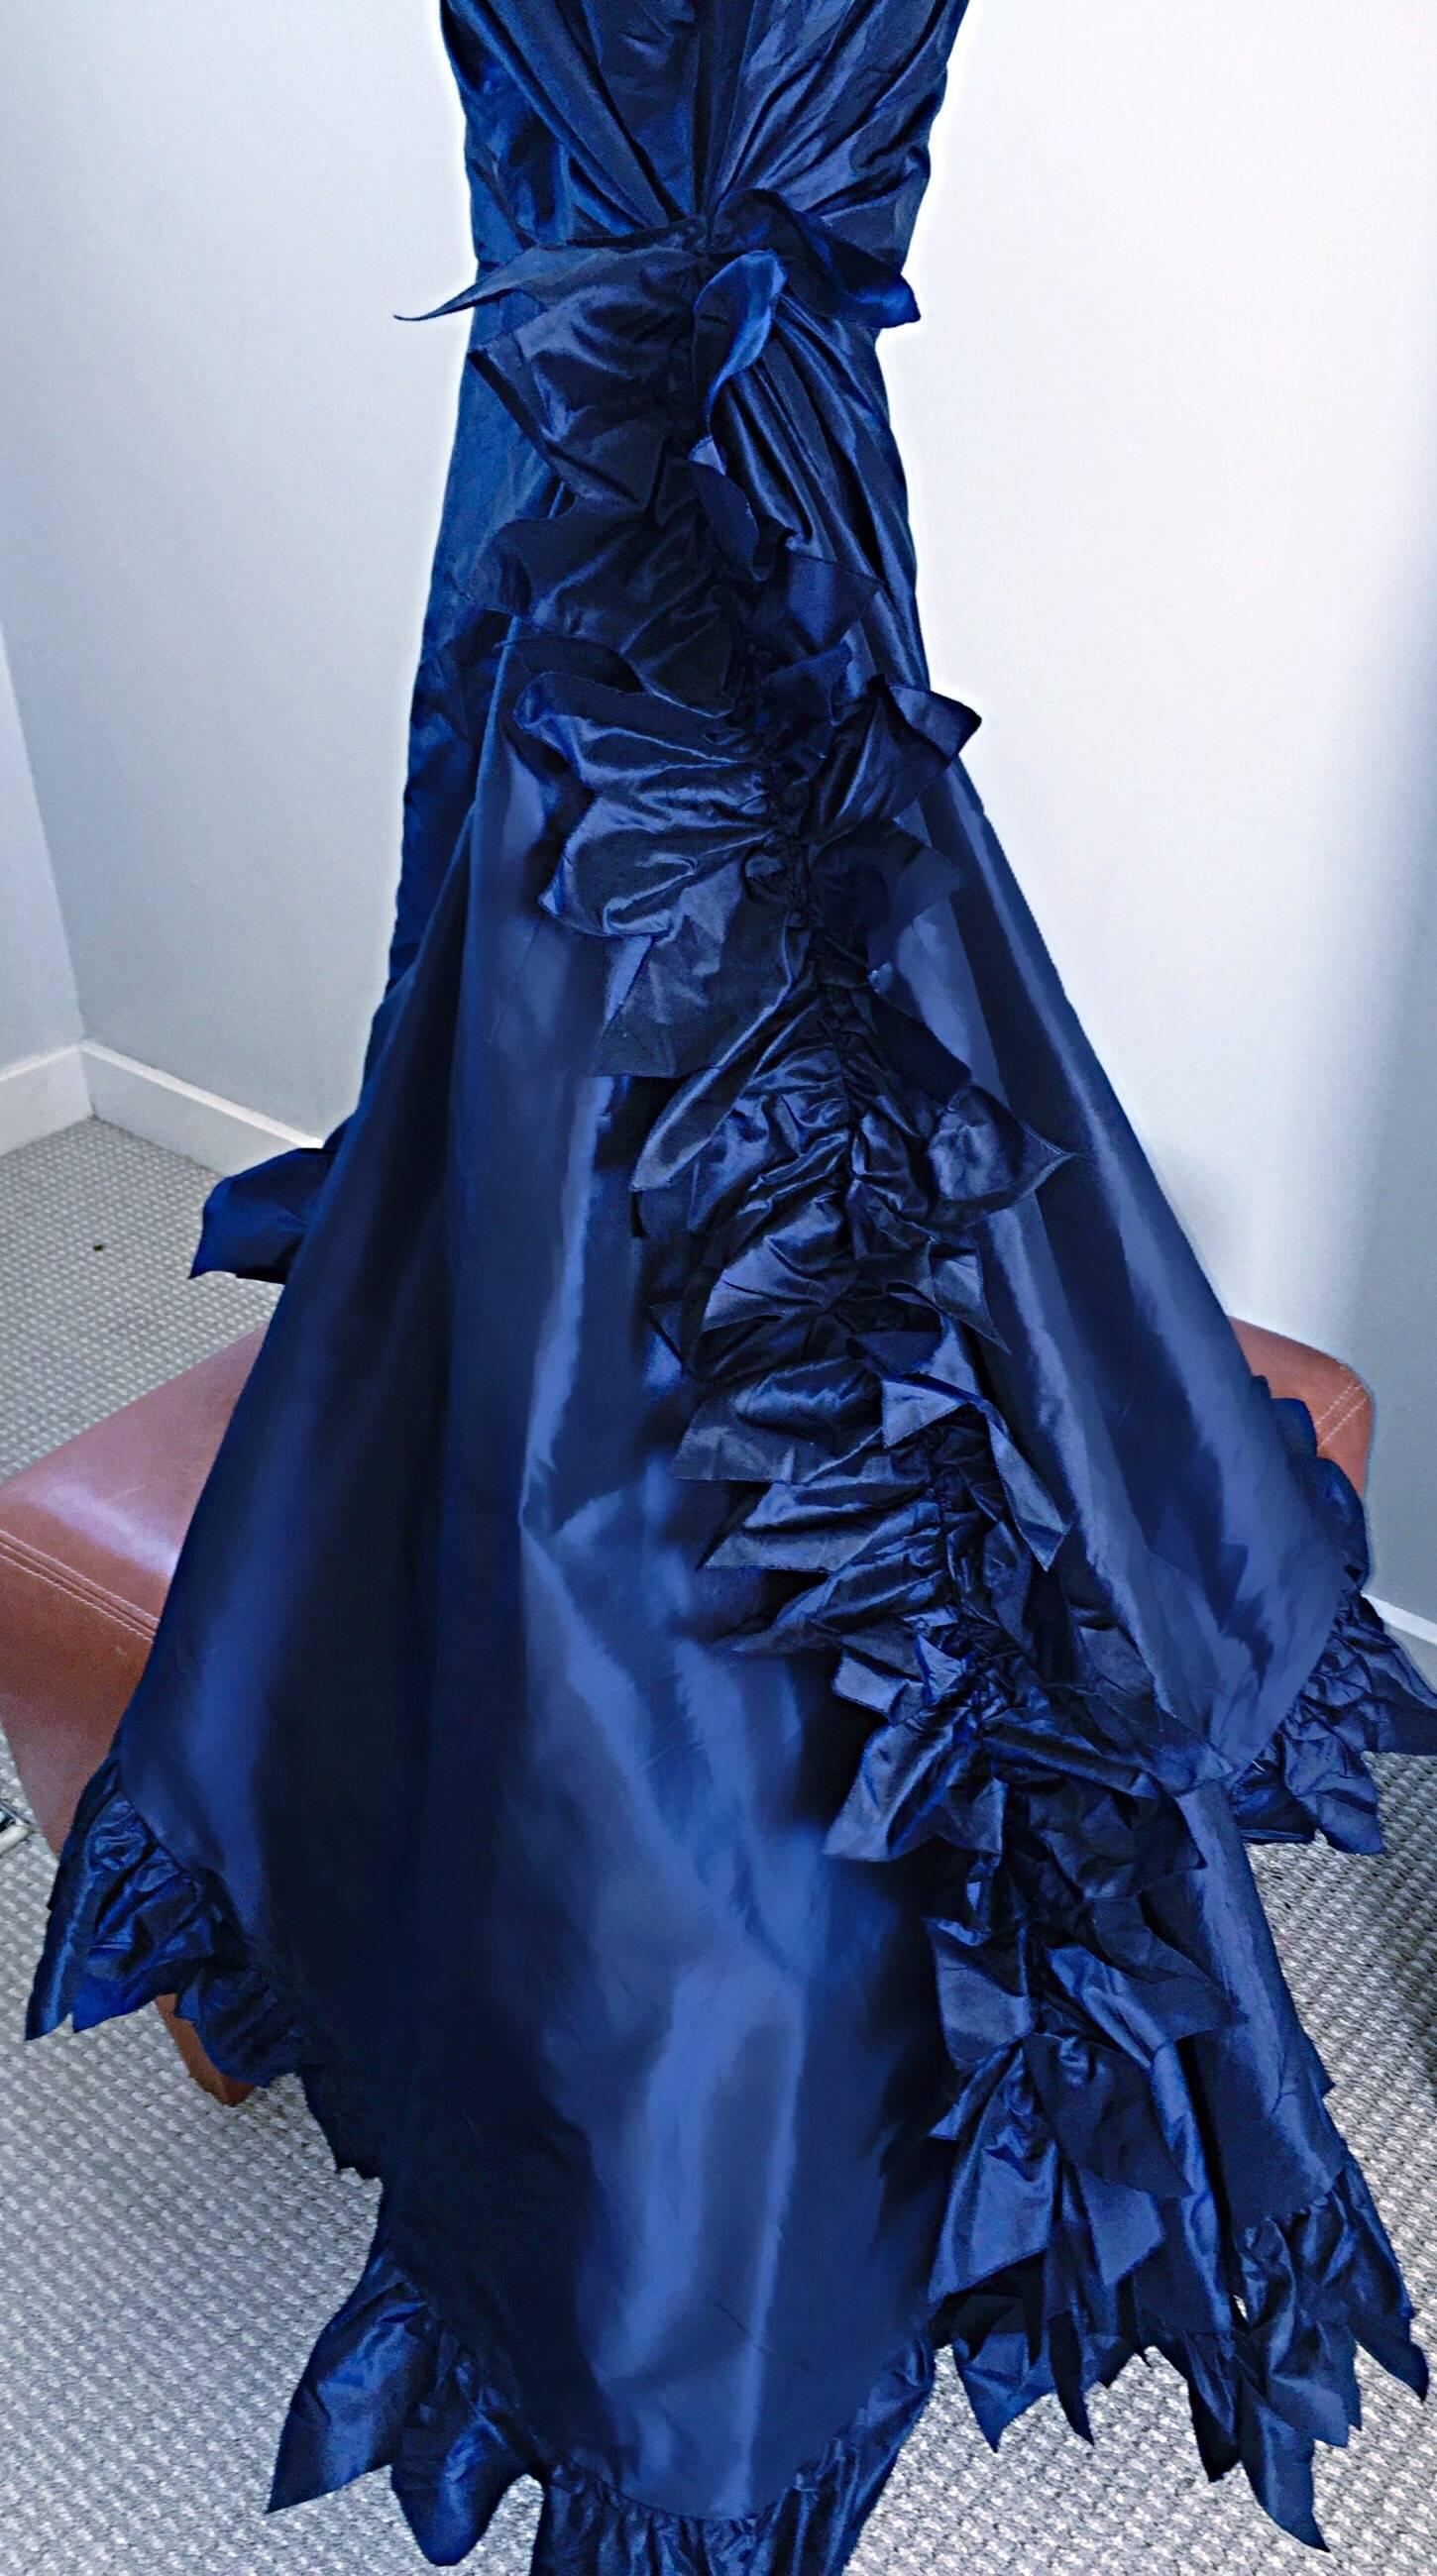 Women's Exquisite Vintage Oscar de la Renta Navy Blue Silk Taffeta Dramatic Size 6 Gown